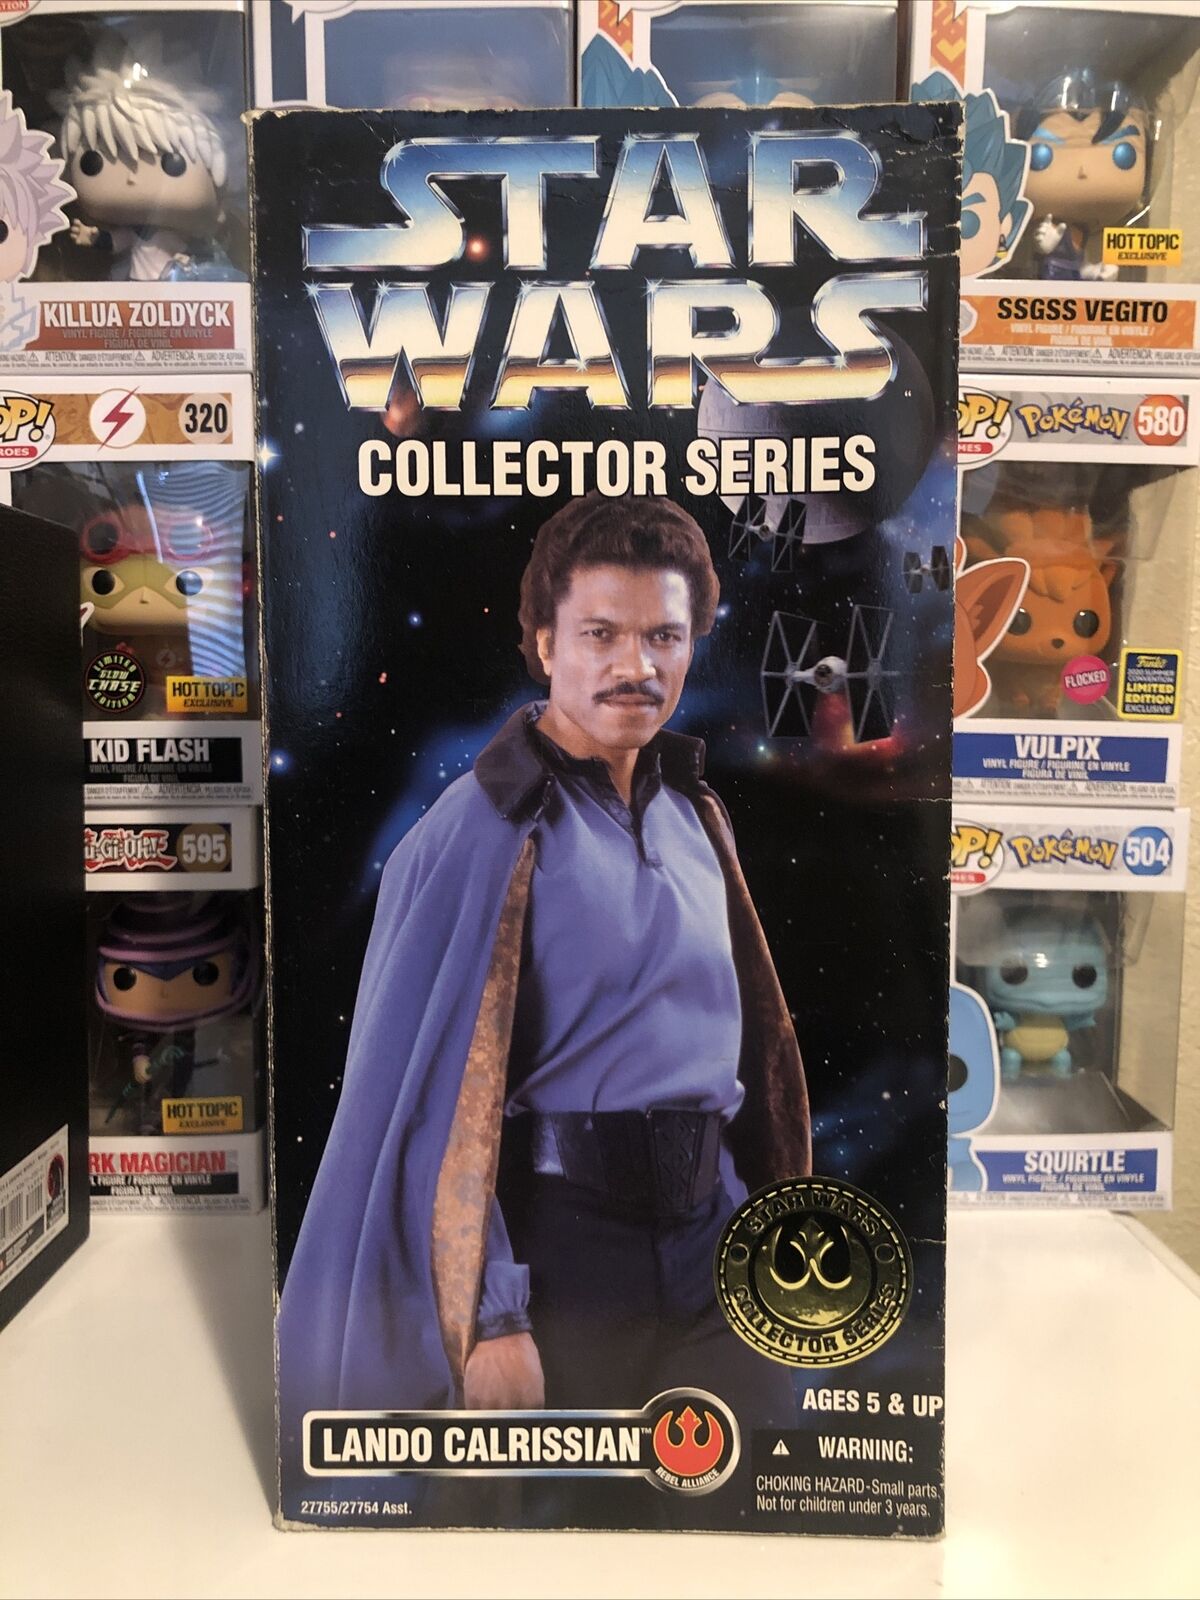 Hasbro Star Wars Collector Series Lando Calrissian Action Figure for sale online